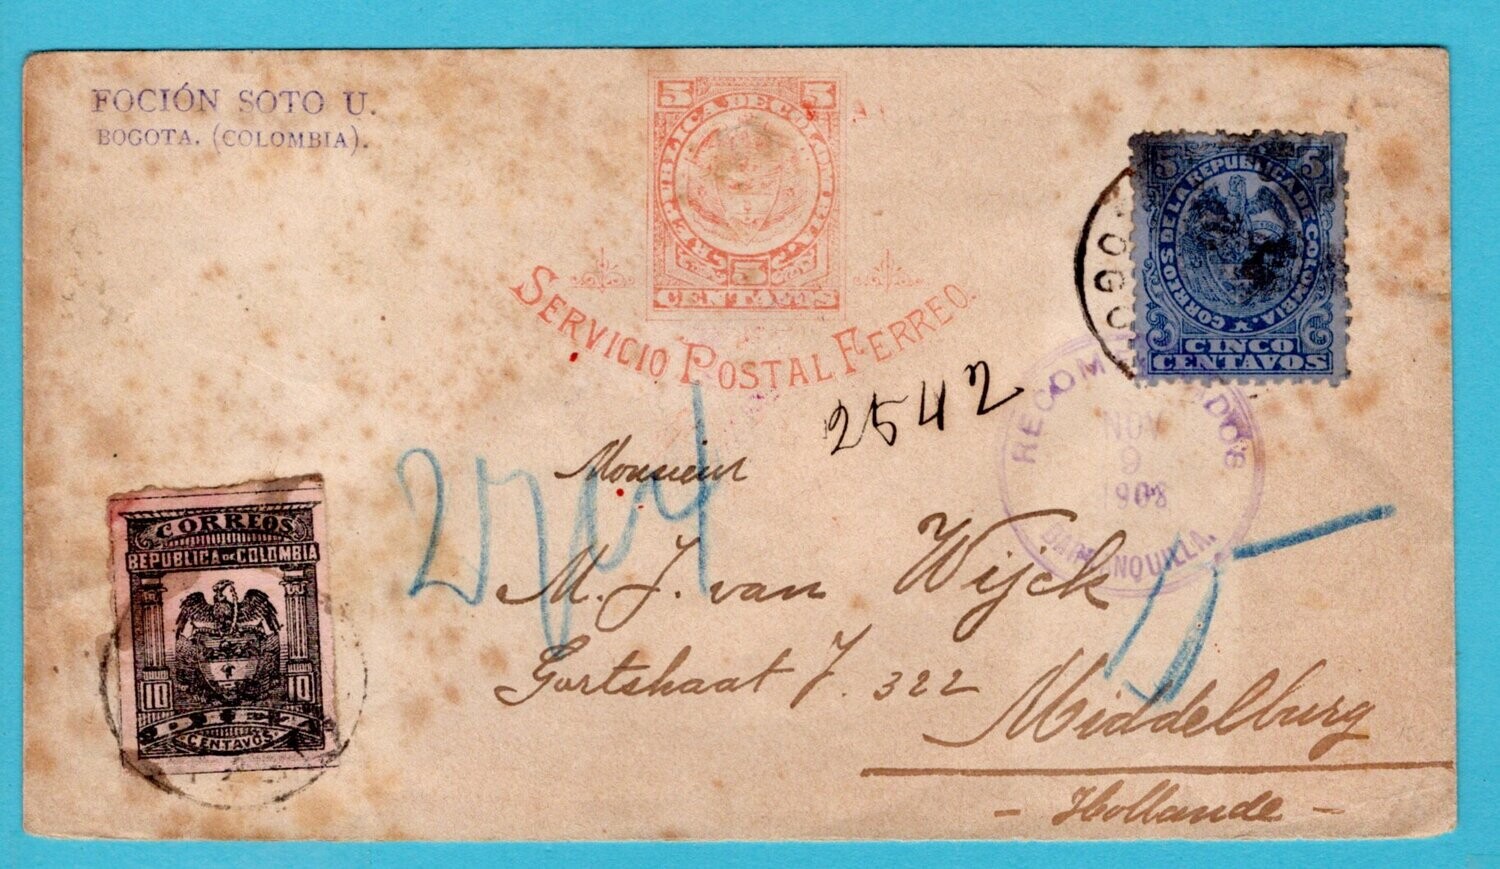 COLOMBIA envelope Servicio Postal Ferreo 1908 Bogota - Netherlands